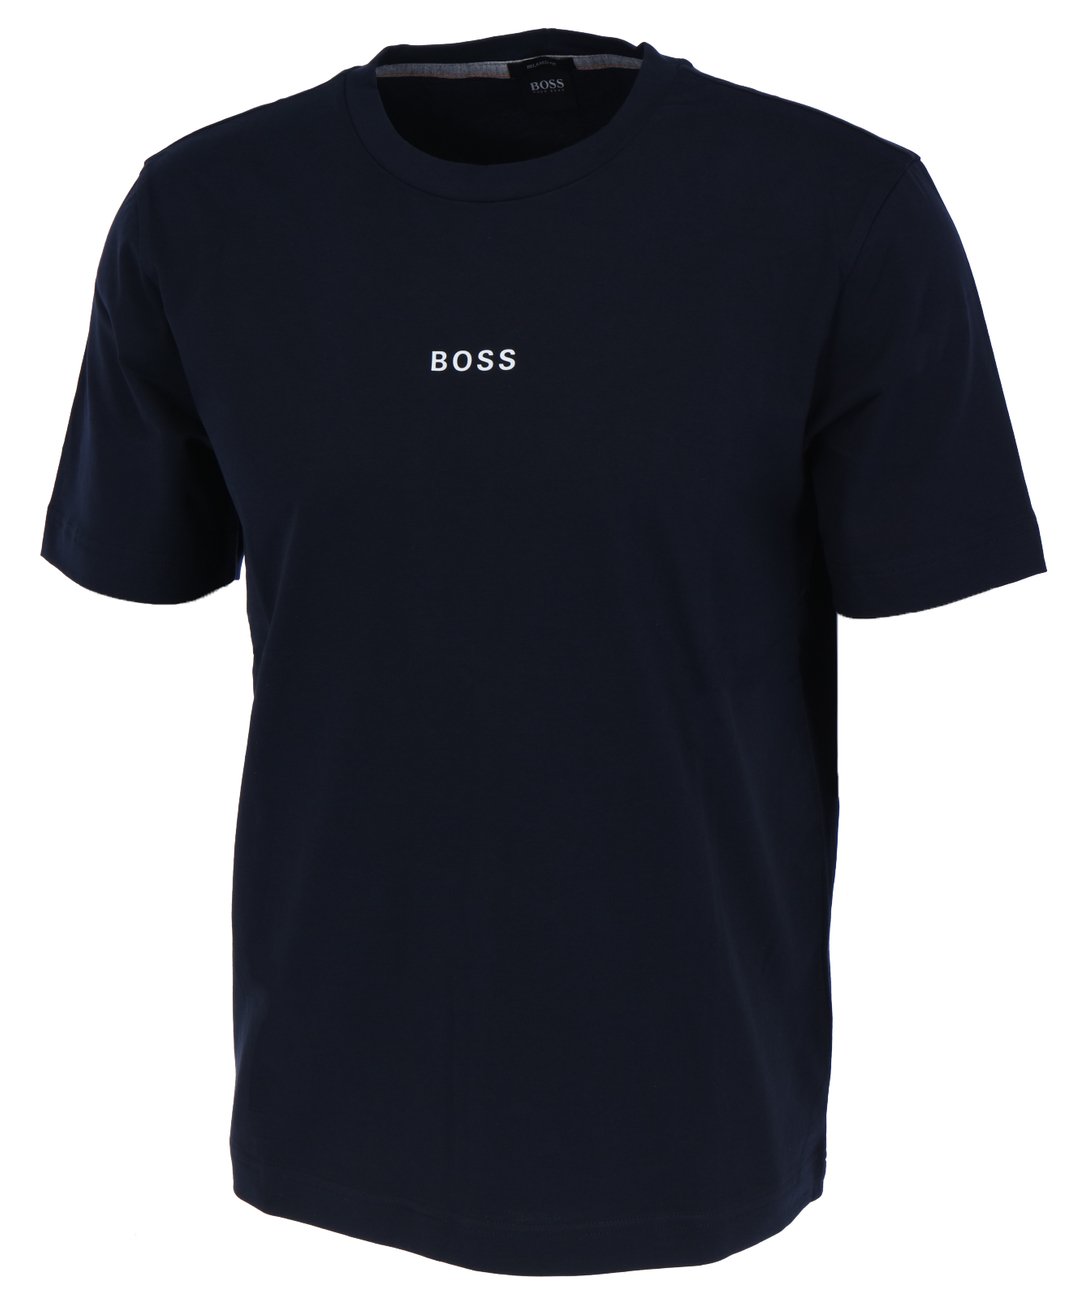 HUGO BOSS TCHUP1 Herren T-Shirt Regular Fit - Hugo Boss - SAGATOO - 4037556013495